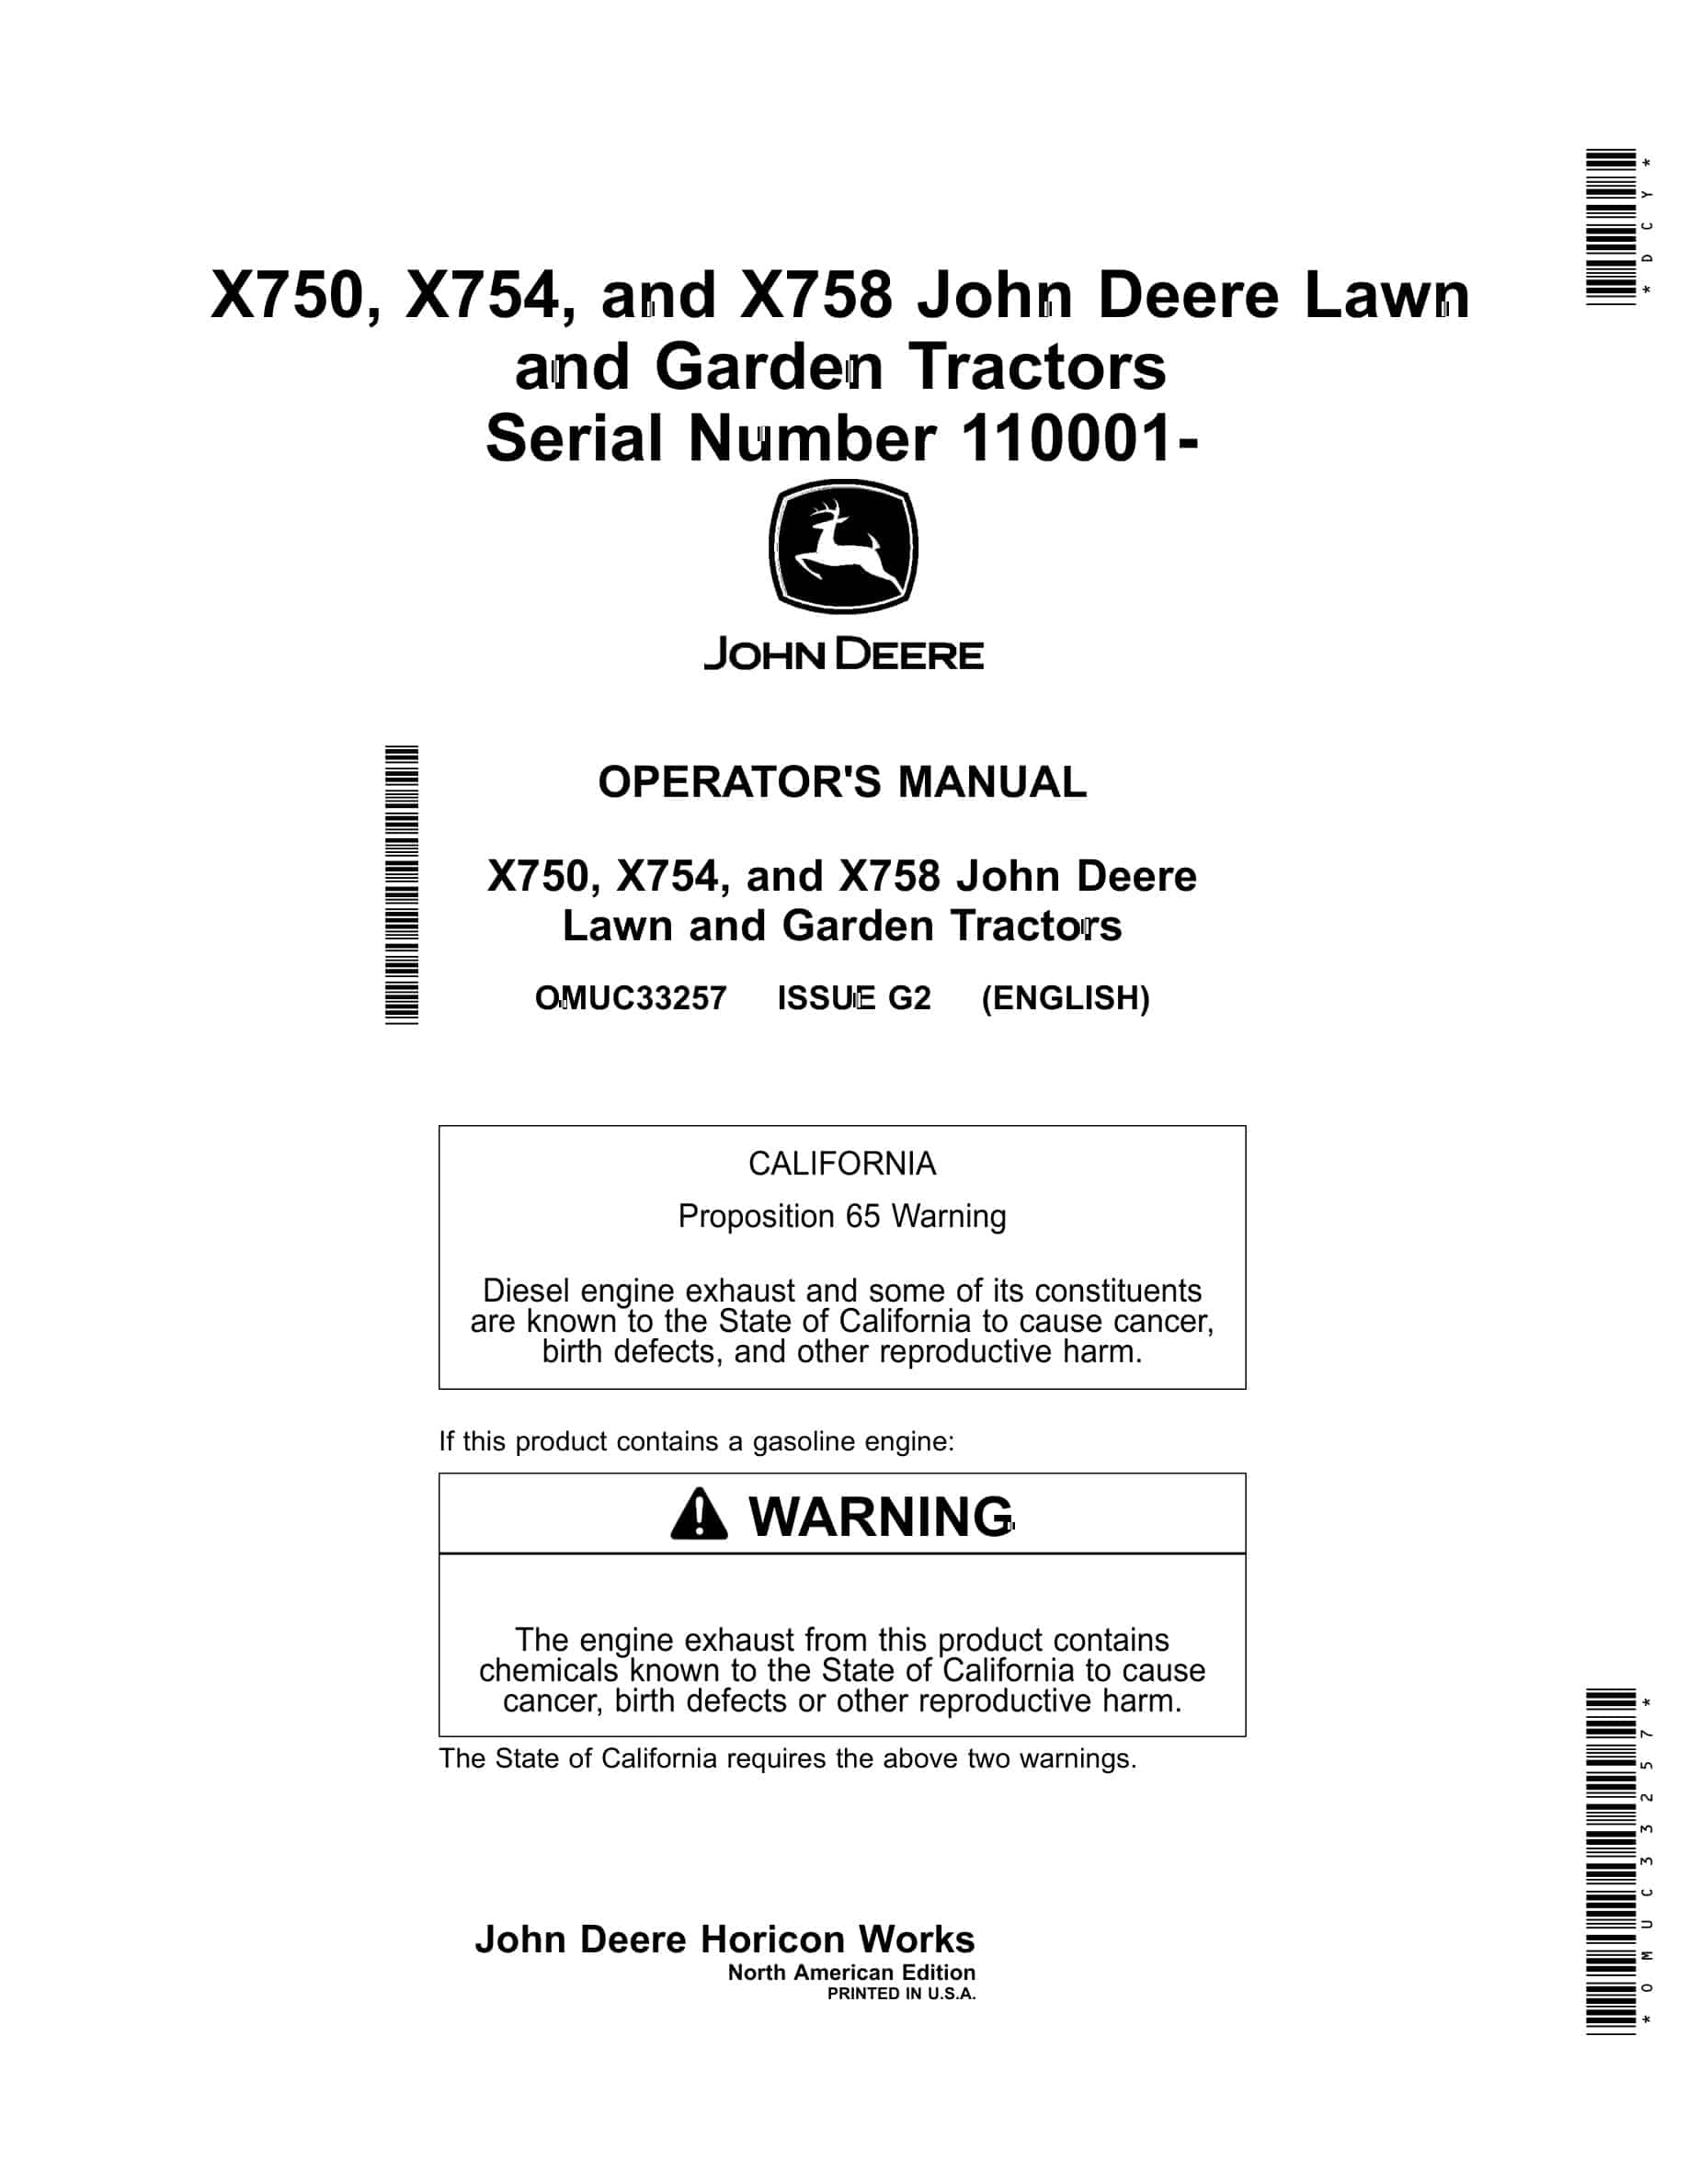 John Deere X750, X754, And X758 Lawn And Garden Tractors Operator Manuals OMUC33257-1